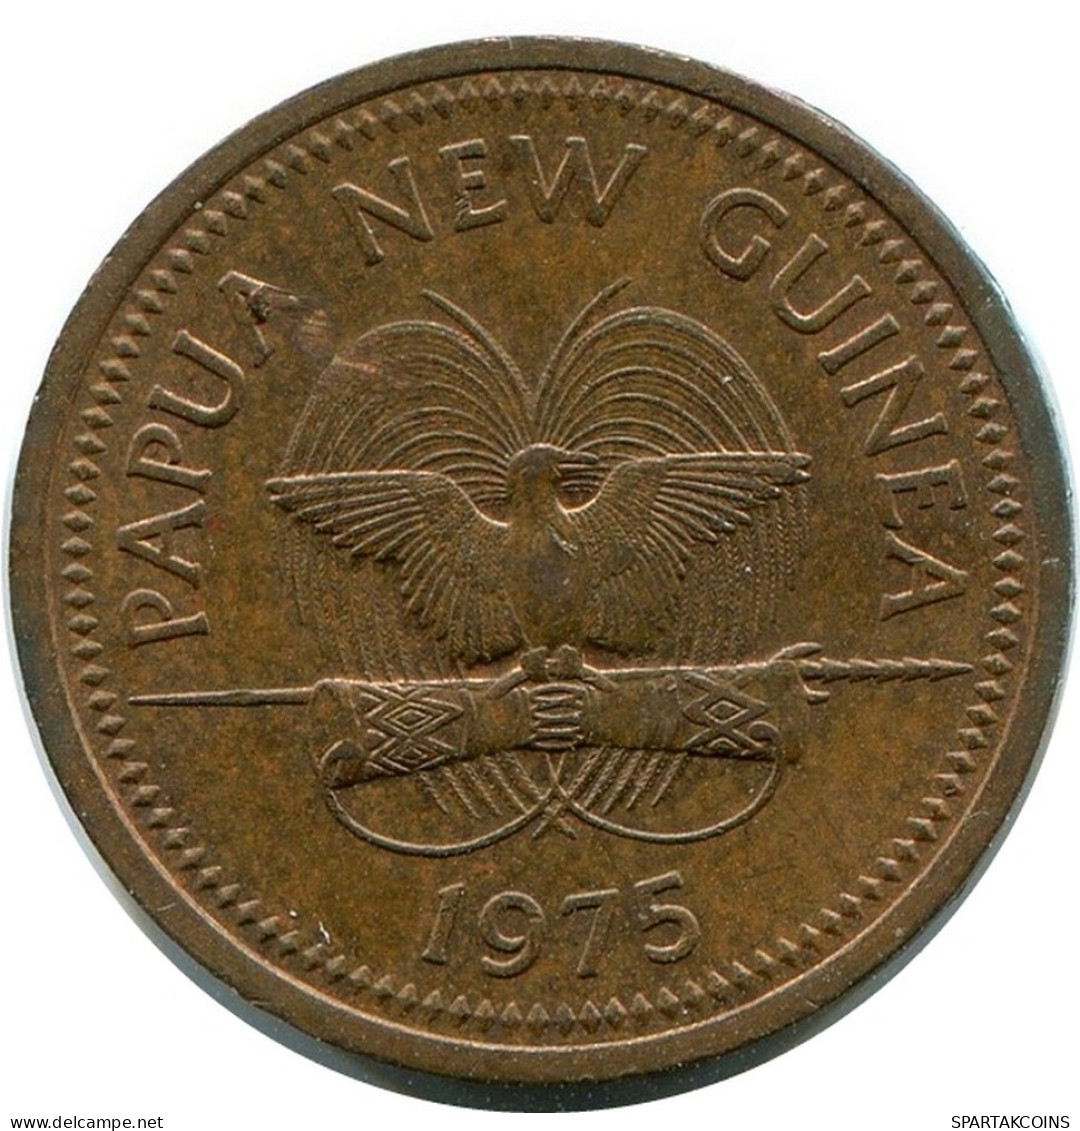 1 TOEA 1975 PAPUA - NEUGUINEA PAPUA NEW GUINEA Münze #BA150.D.A - Papua New Guinea